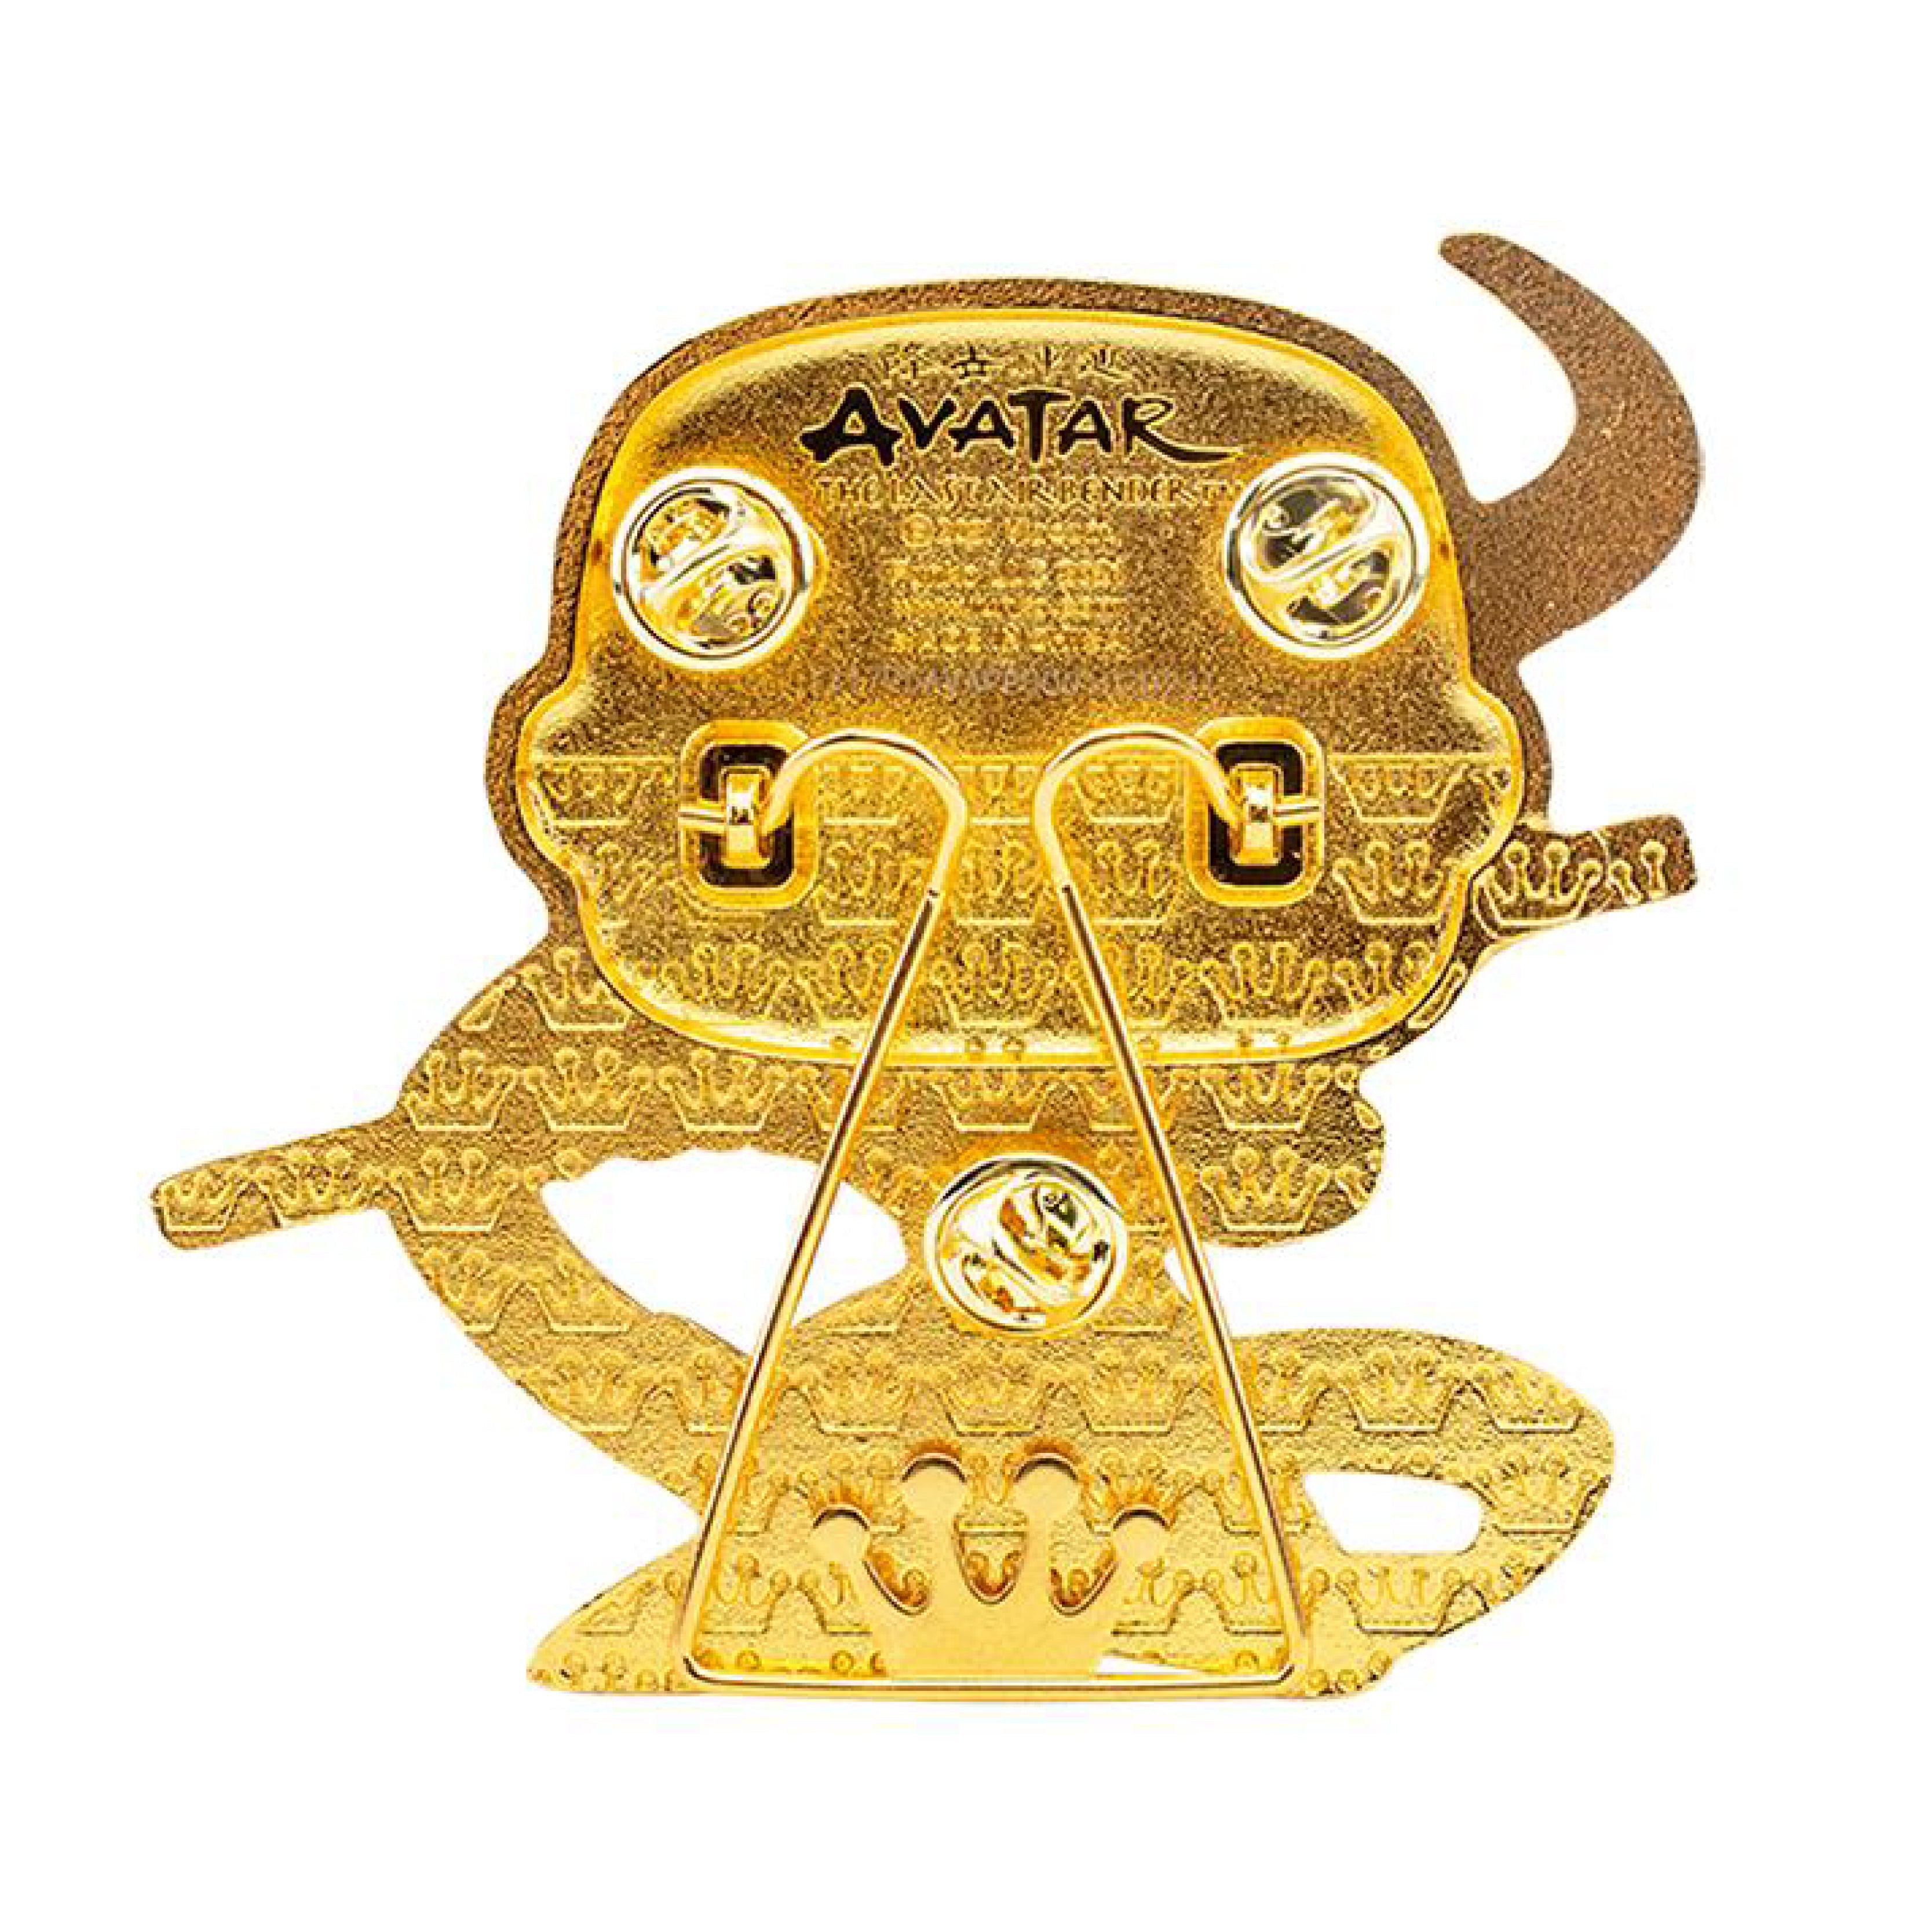 Avatar Aang Pin - Enamel Fill on Gold Hardware